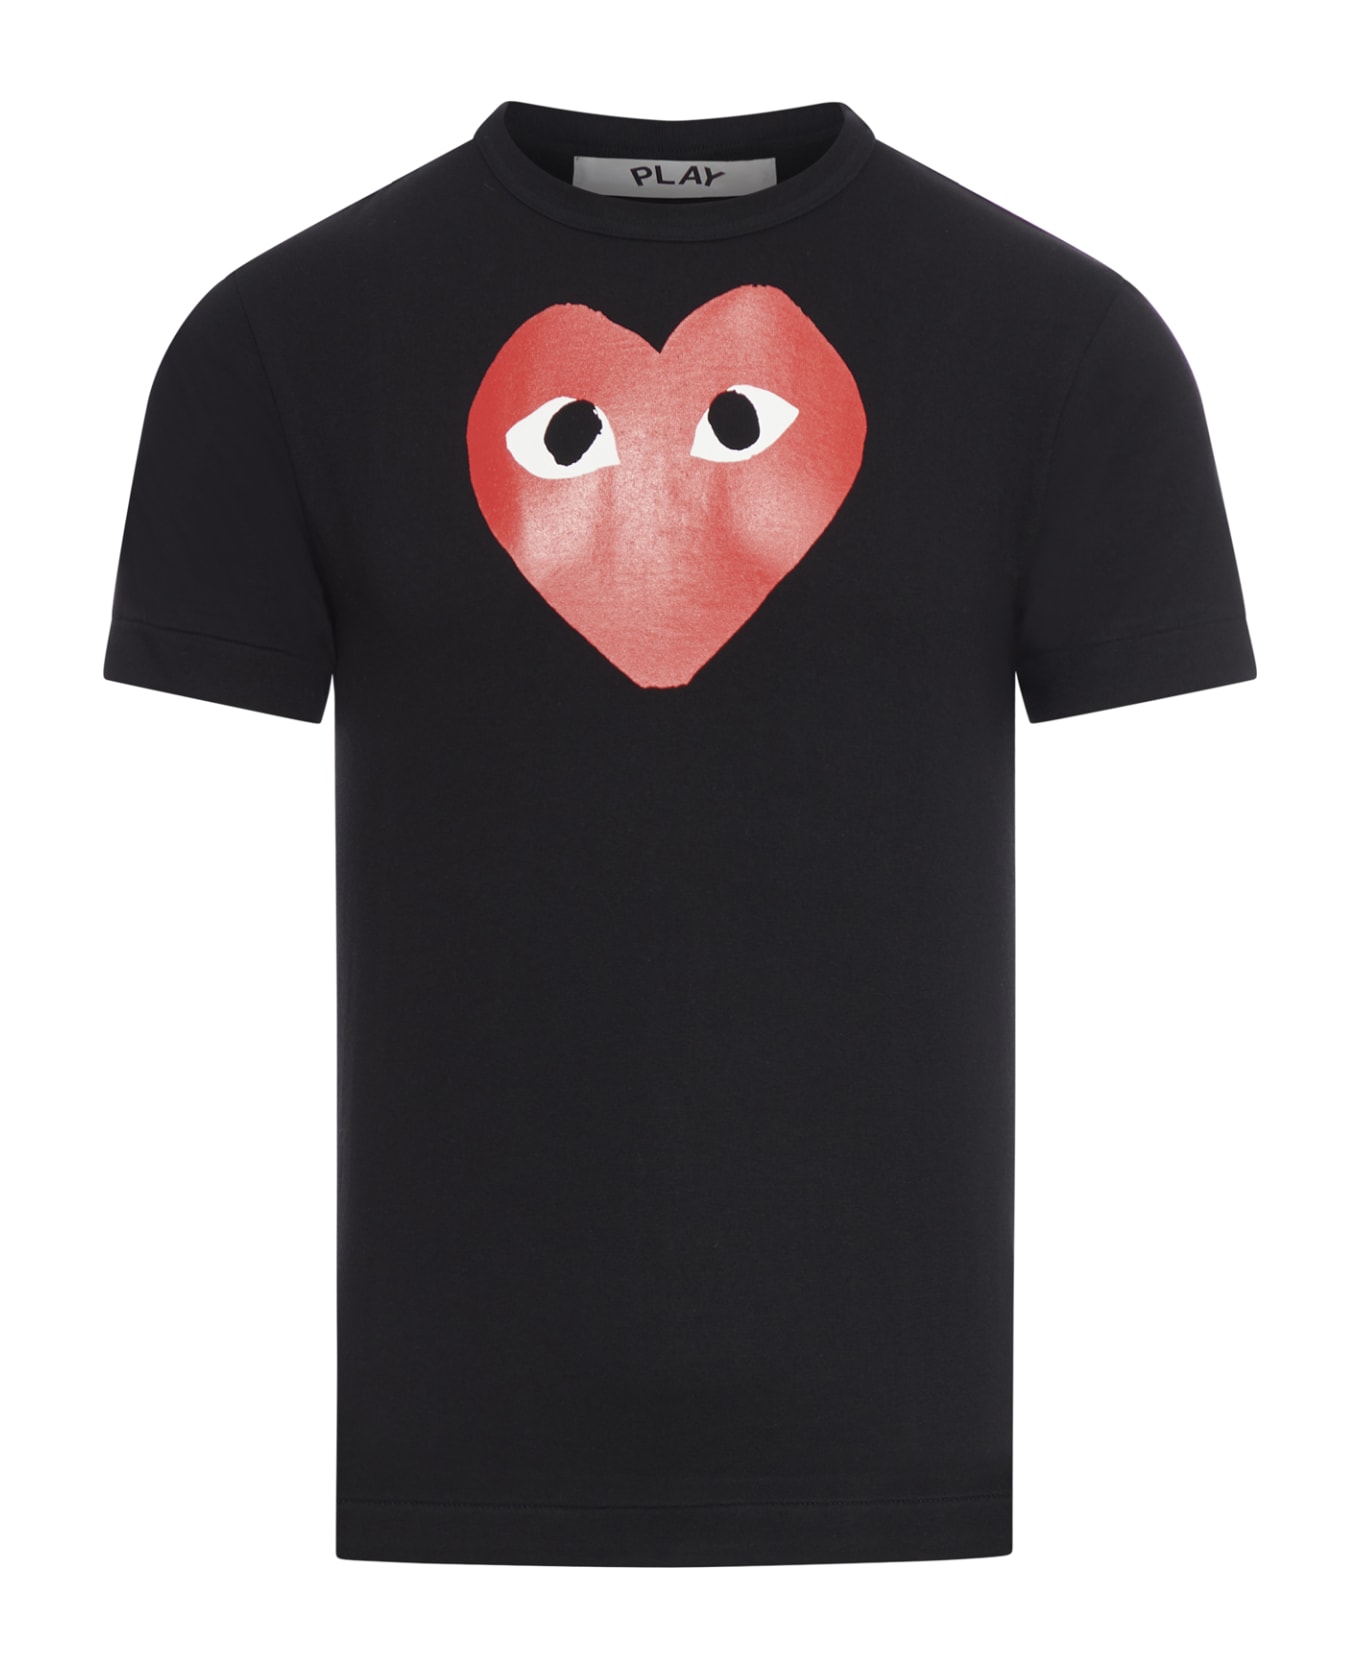 Comme des Garçons Play Play T-shirt Red Heart - Black